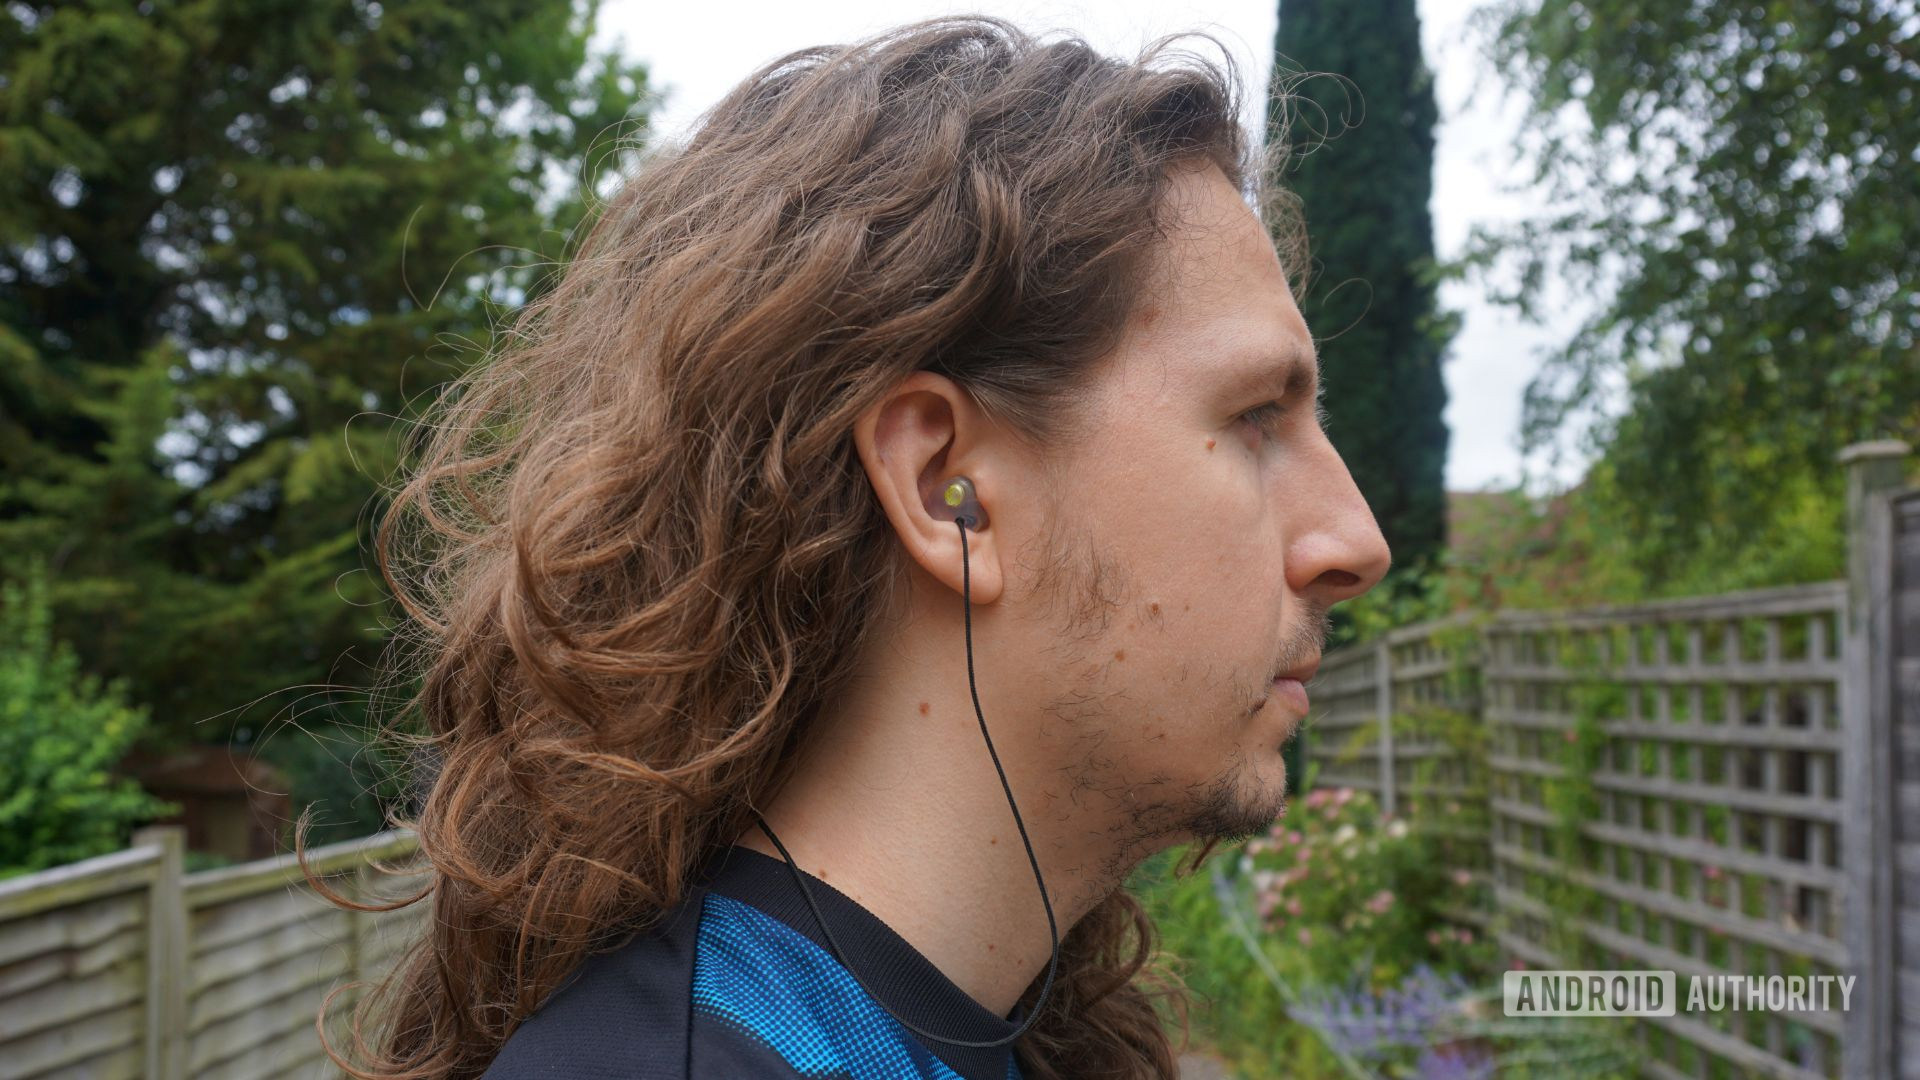 acs custom earplug with removable neckband being worn